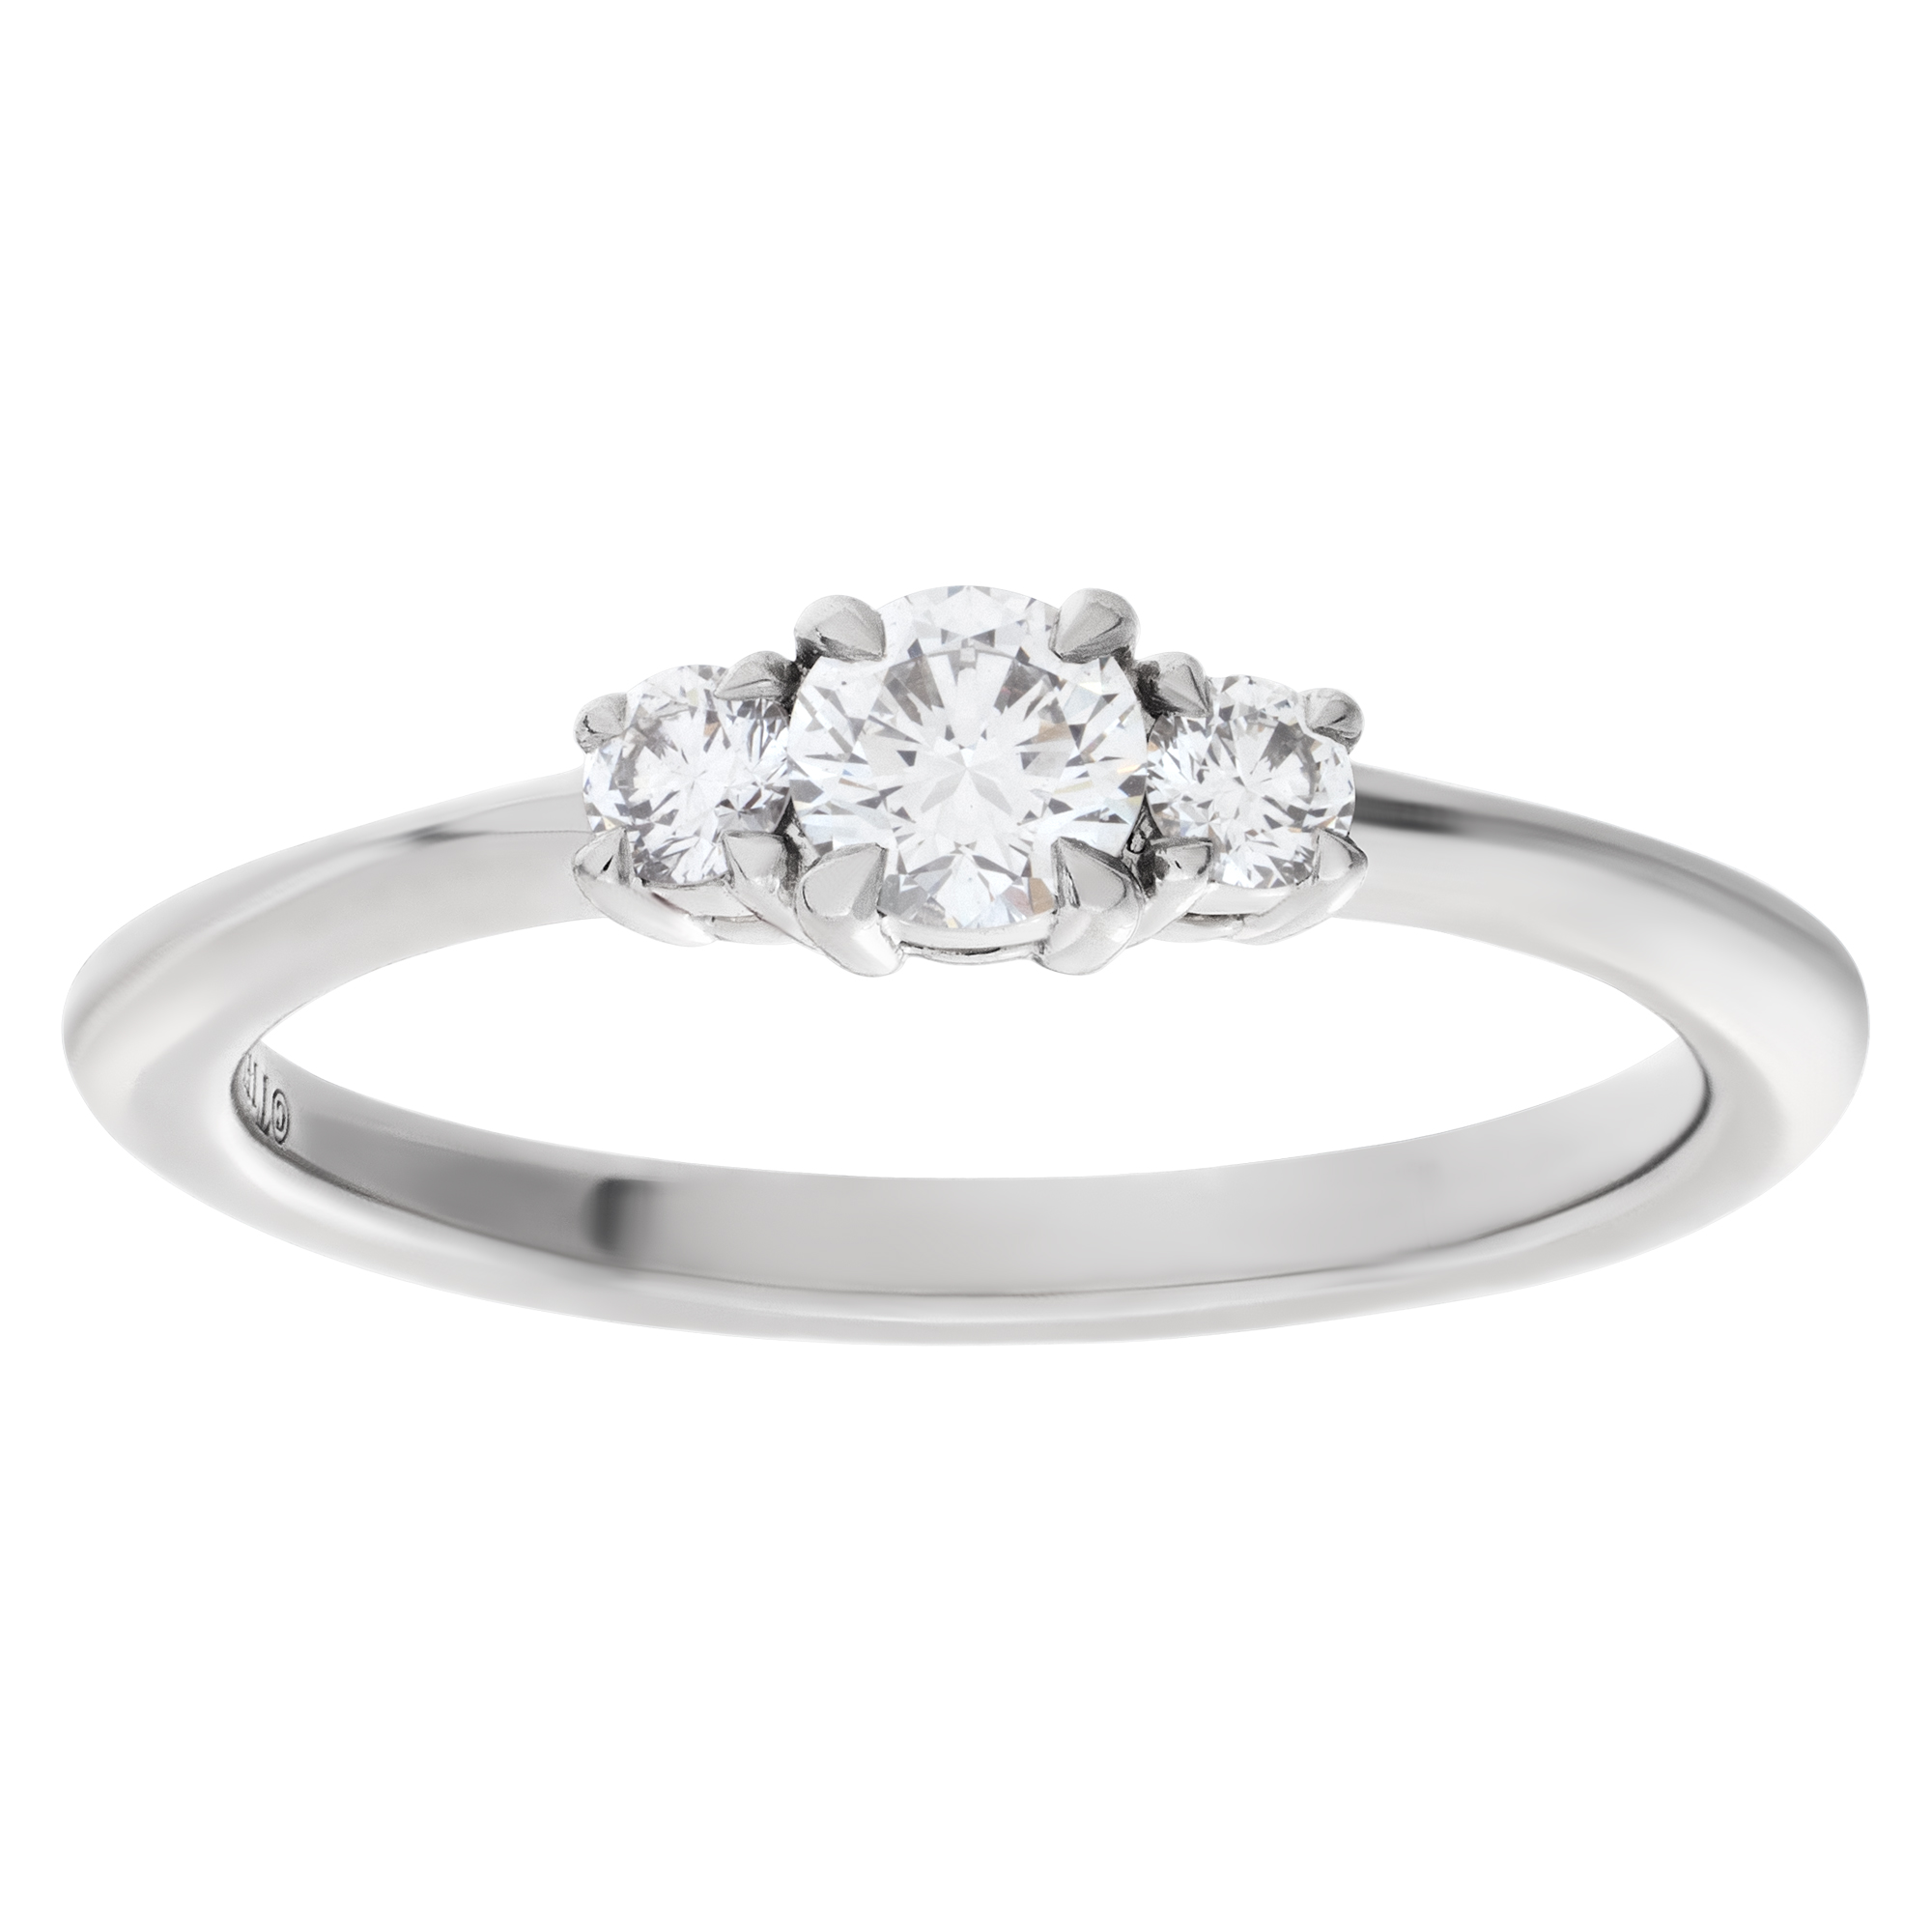 Tiffany & Co. 3 Stone Diamond Ring in Platinum